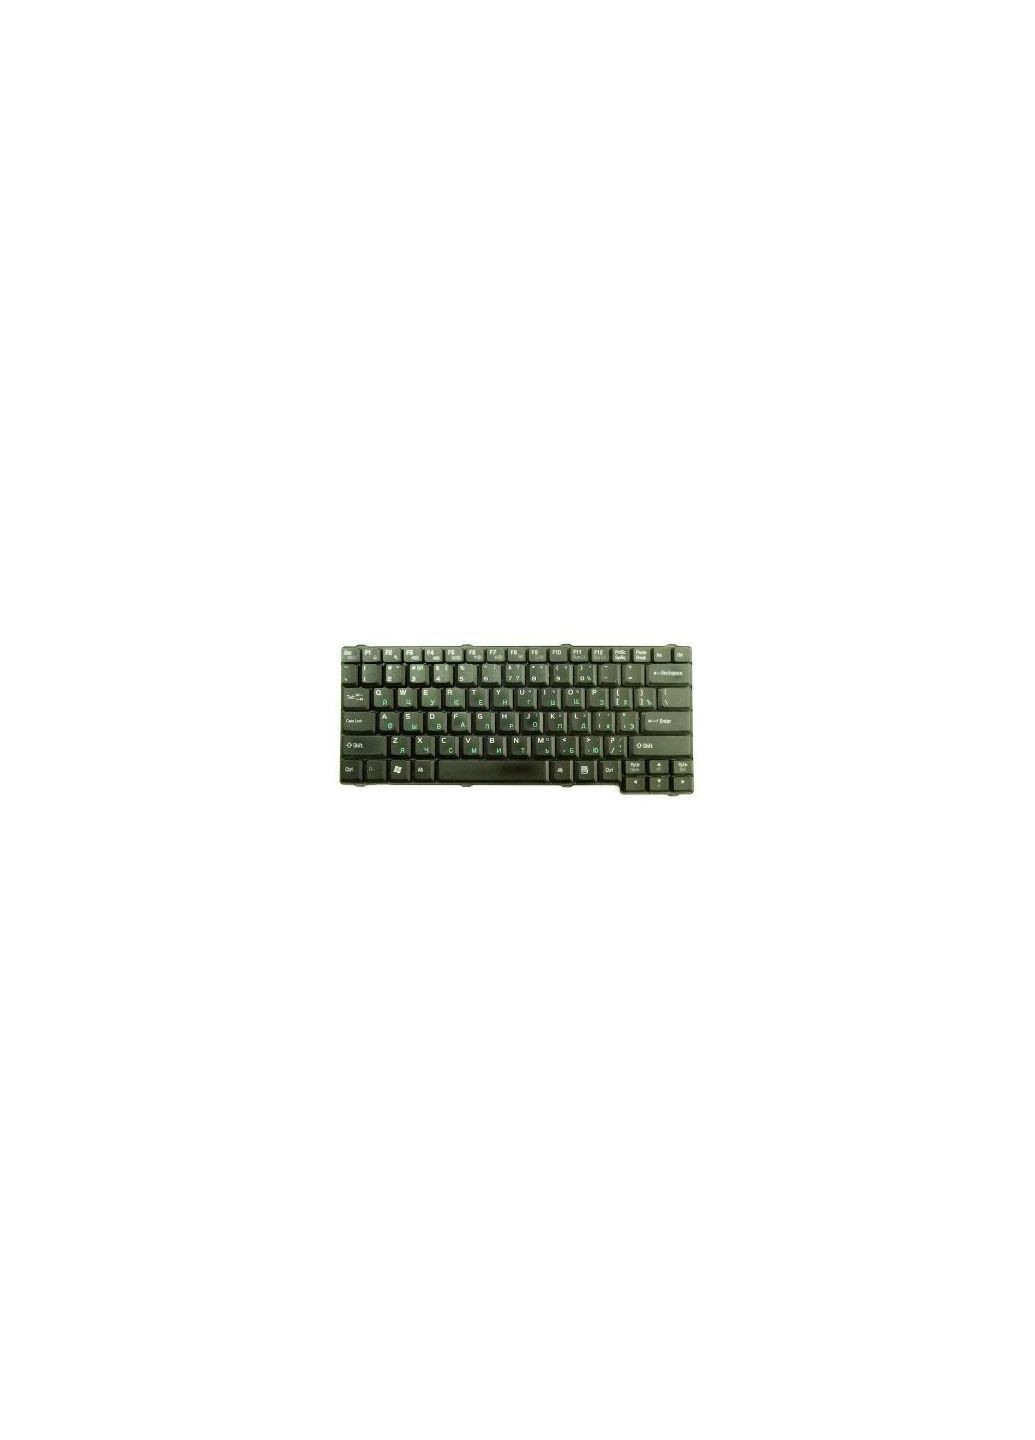 Клавиатура для ноутбука MP03263US-9202/V-0208BIDS1-US (A43322) Toshiba mp-03263us-9202/v-0208bids1-us (276707421)